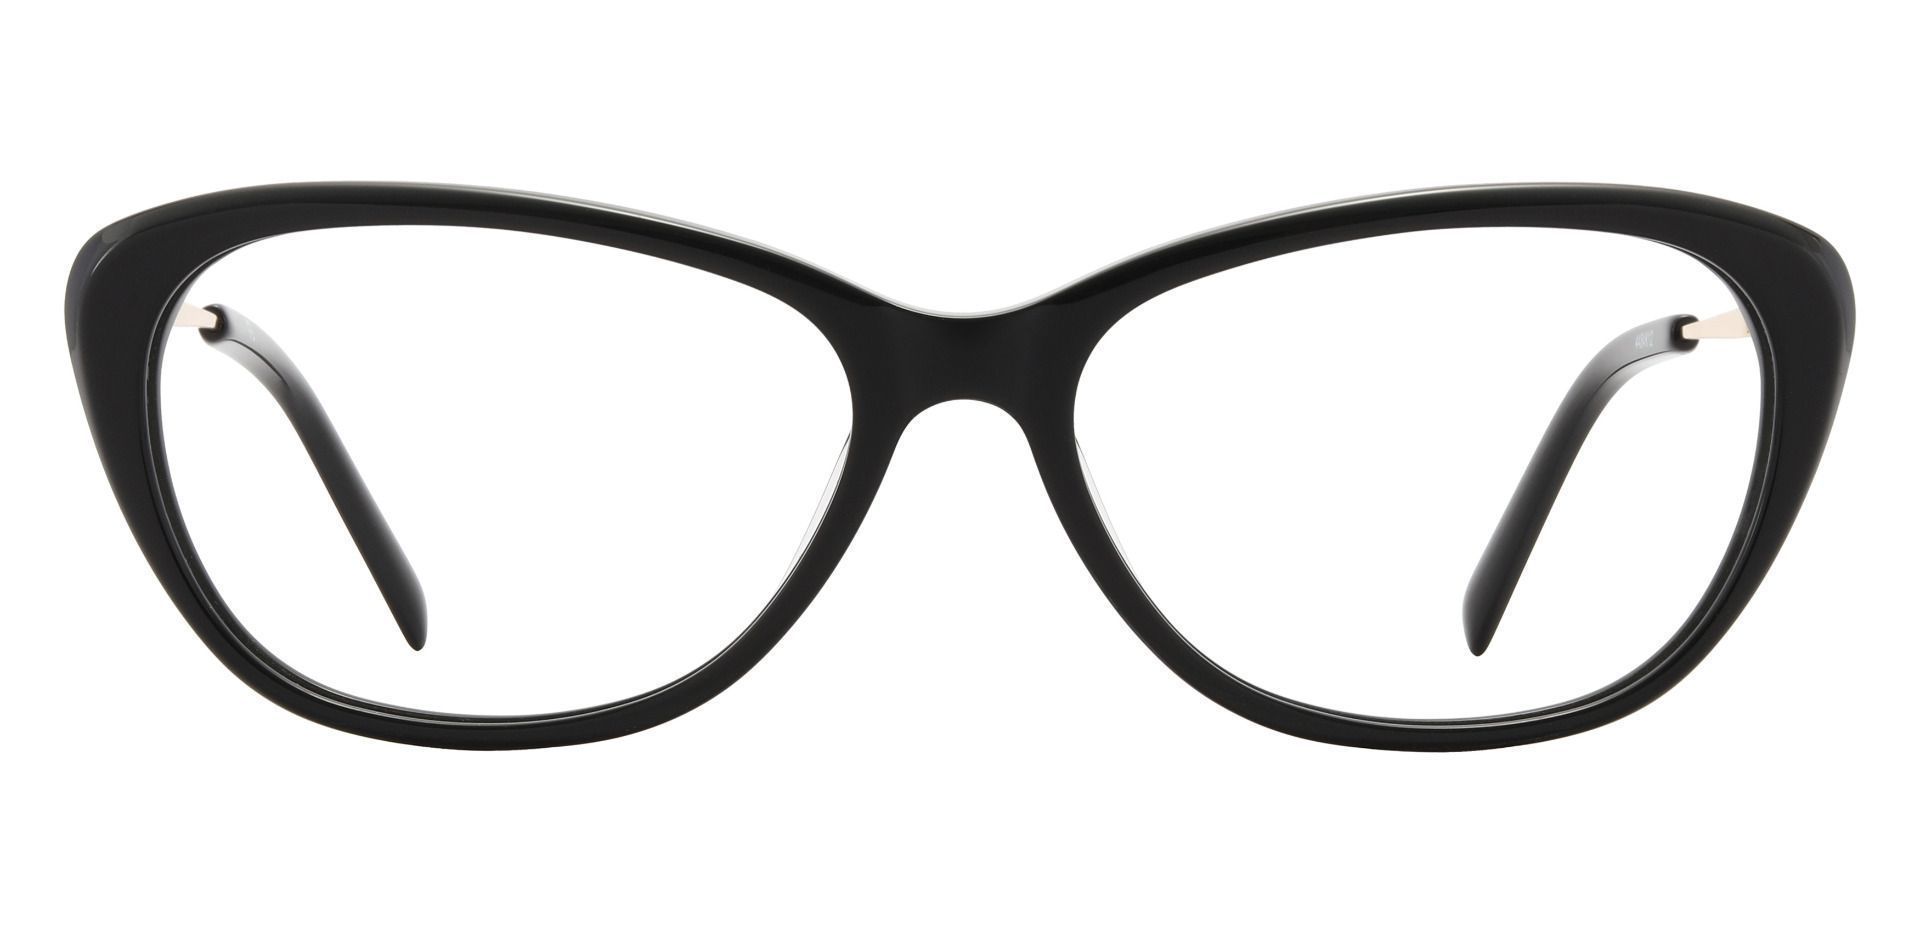 Elyria Cat Eye Prescription Glasses - Black